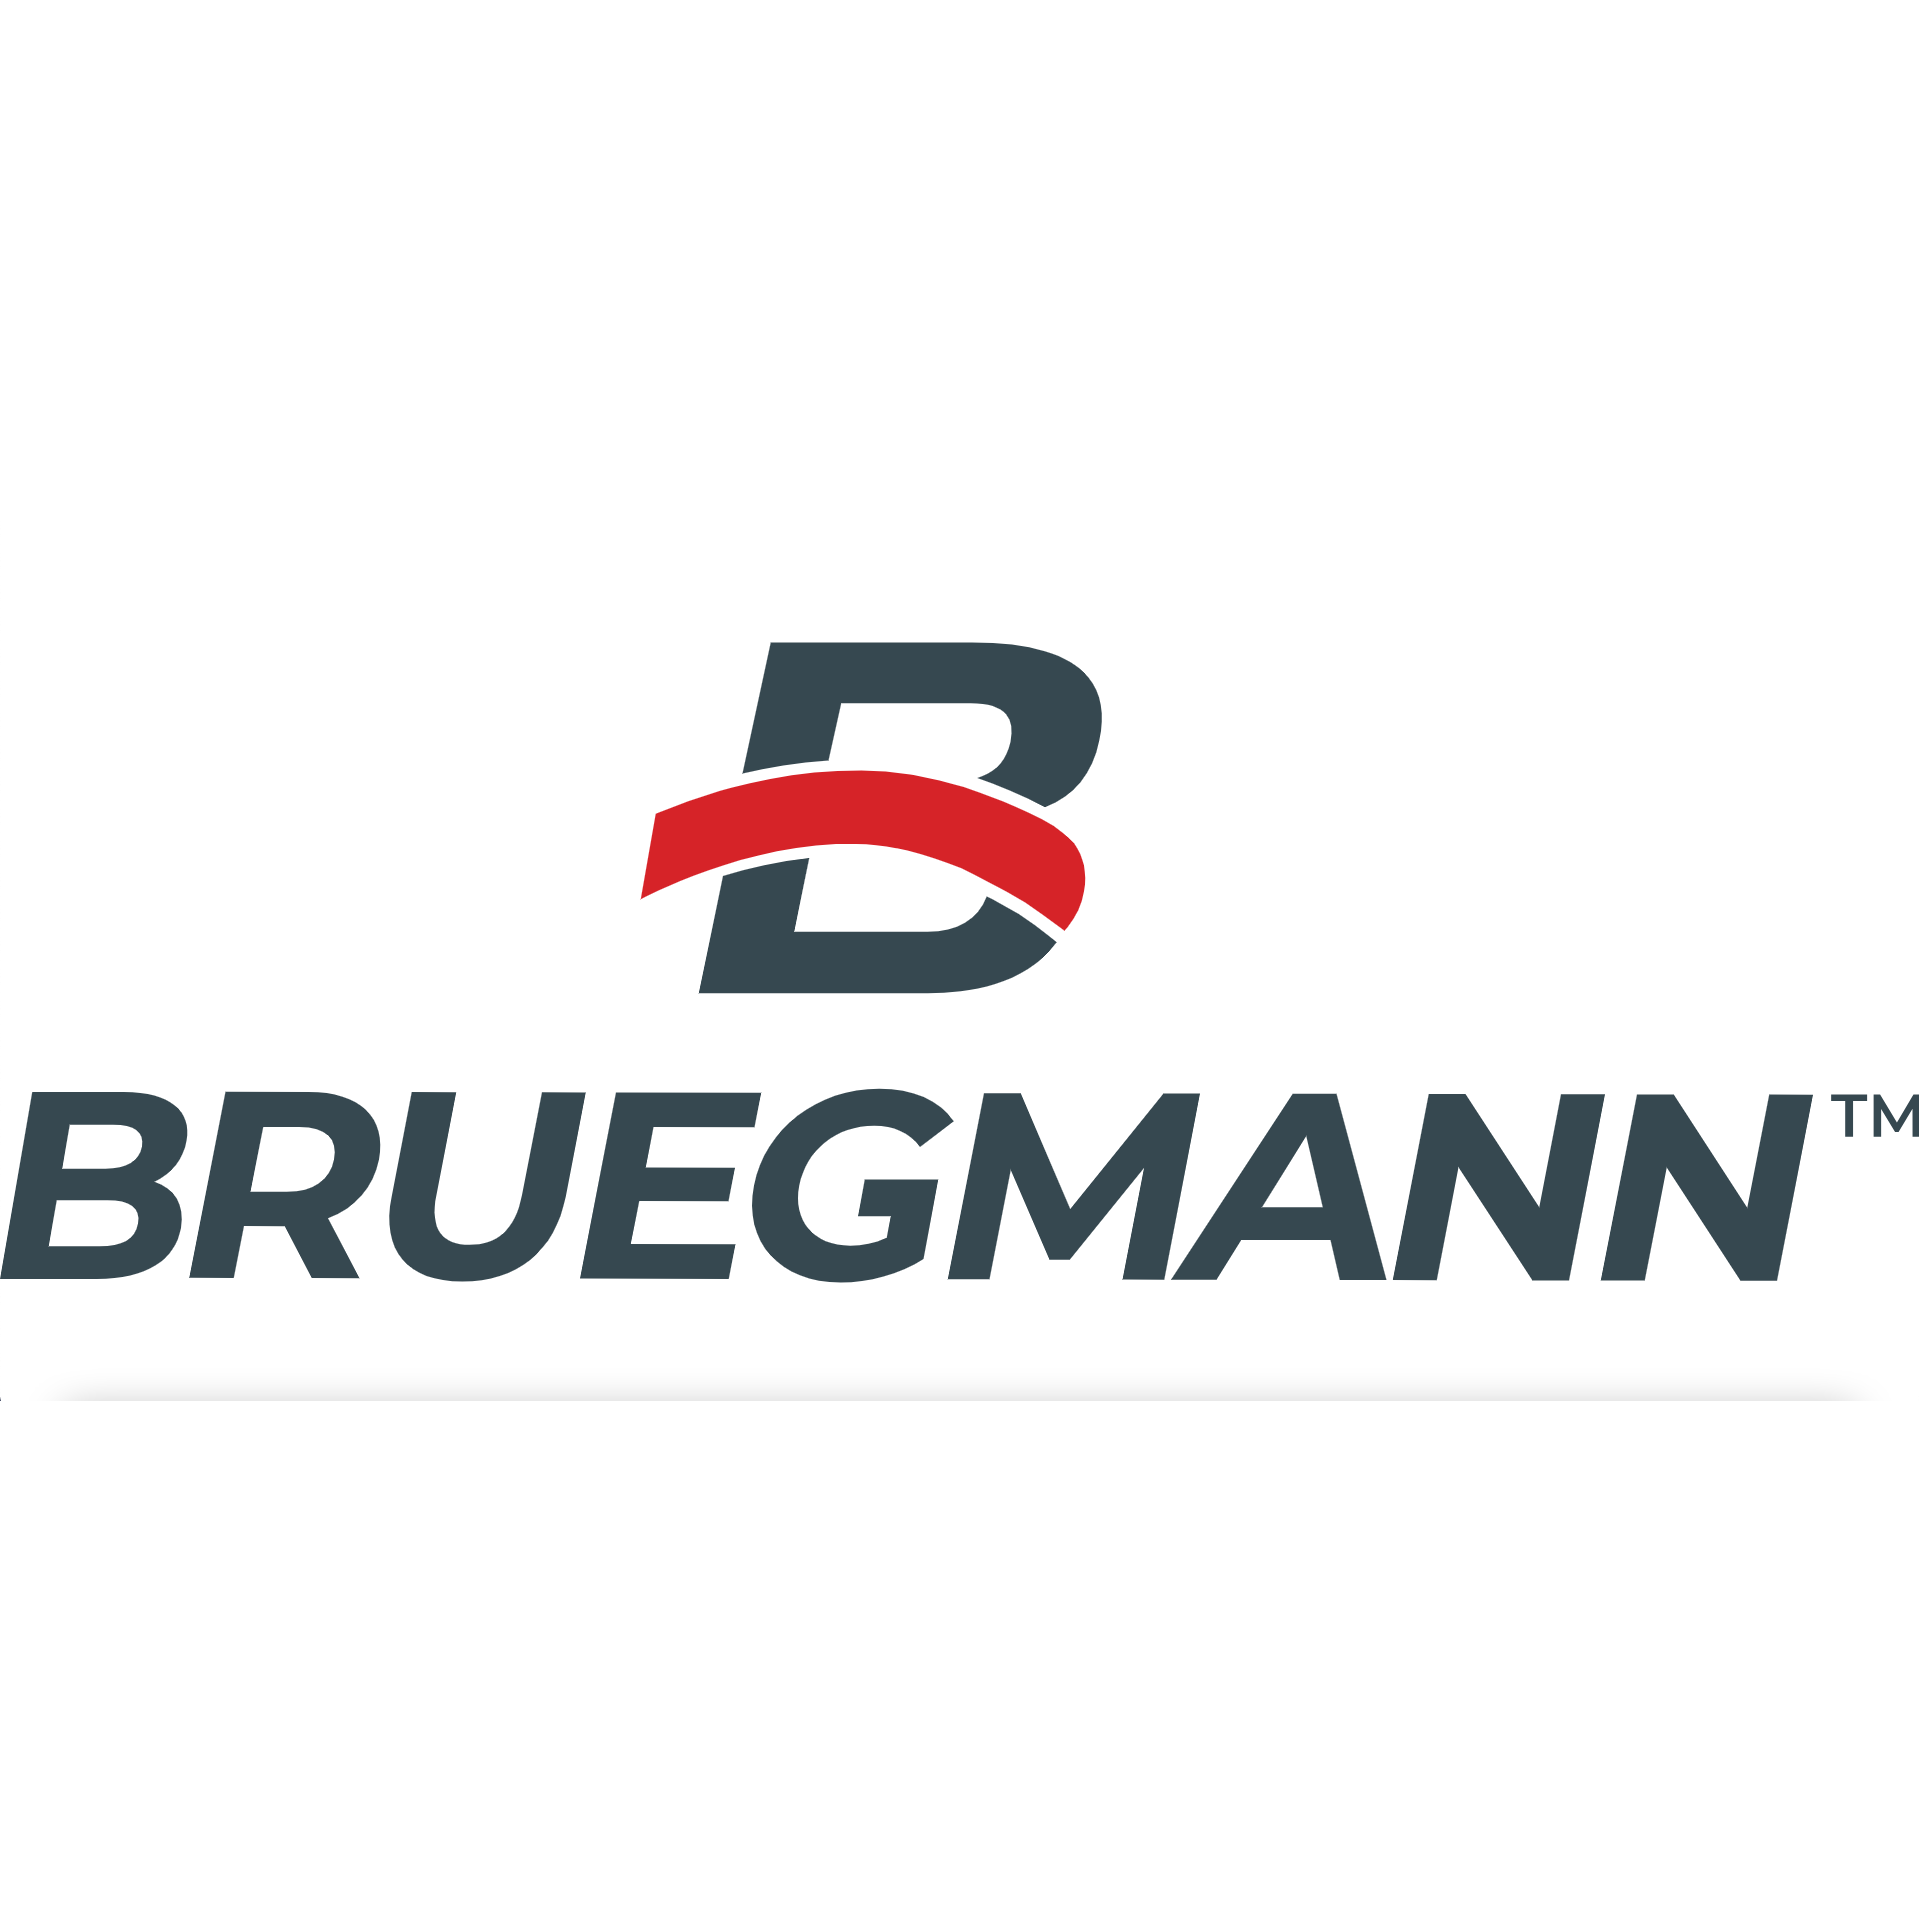 Bruegmann GmbH & Co. KG in Hagen